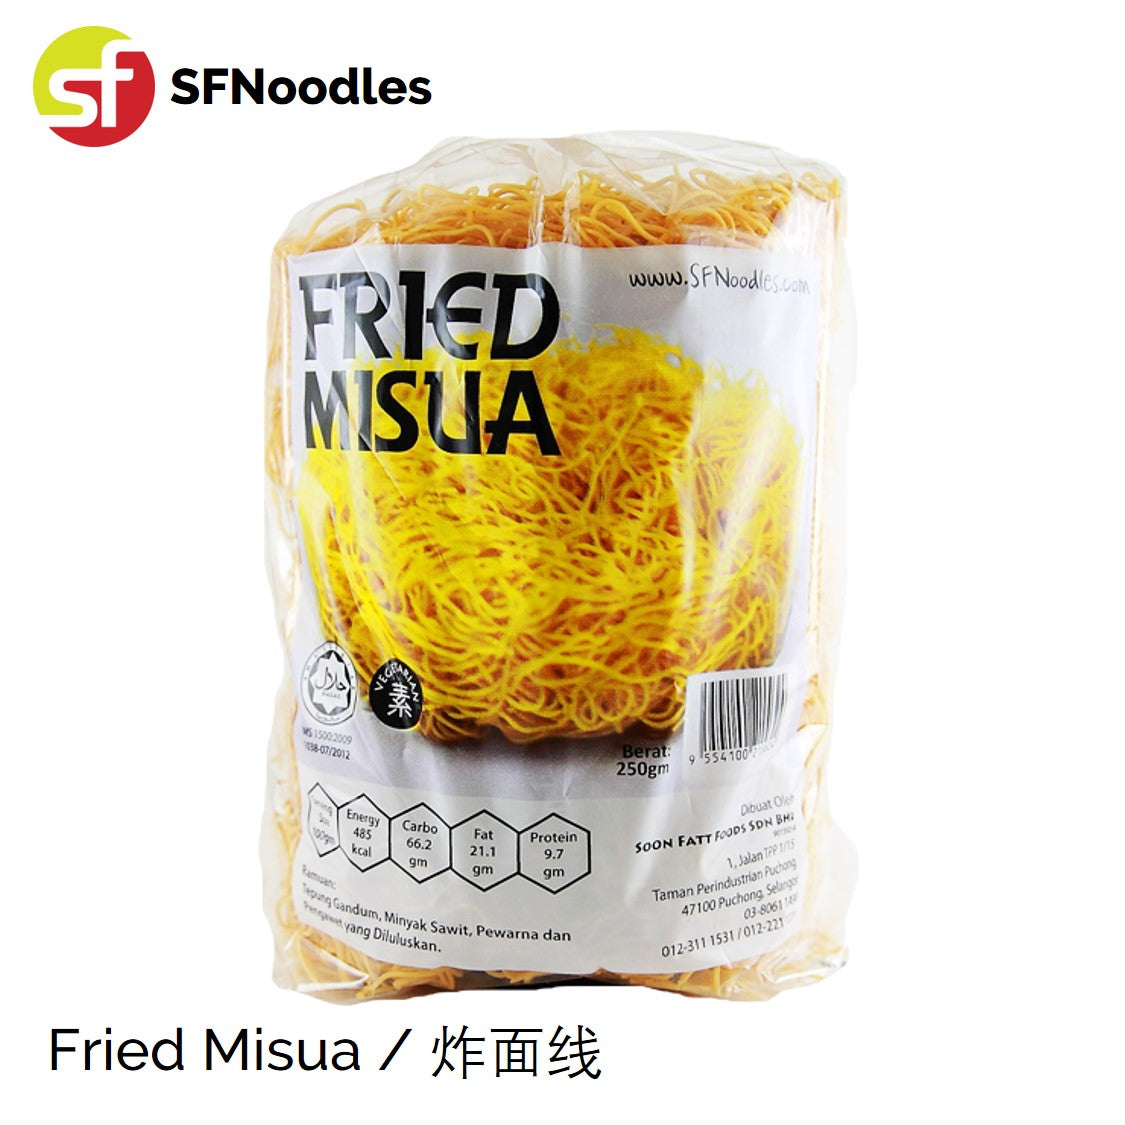 Fried Misua (炸面线)